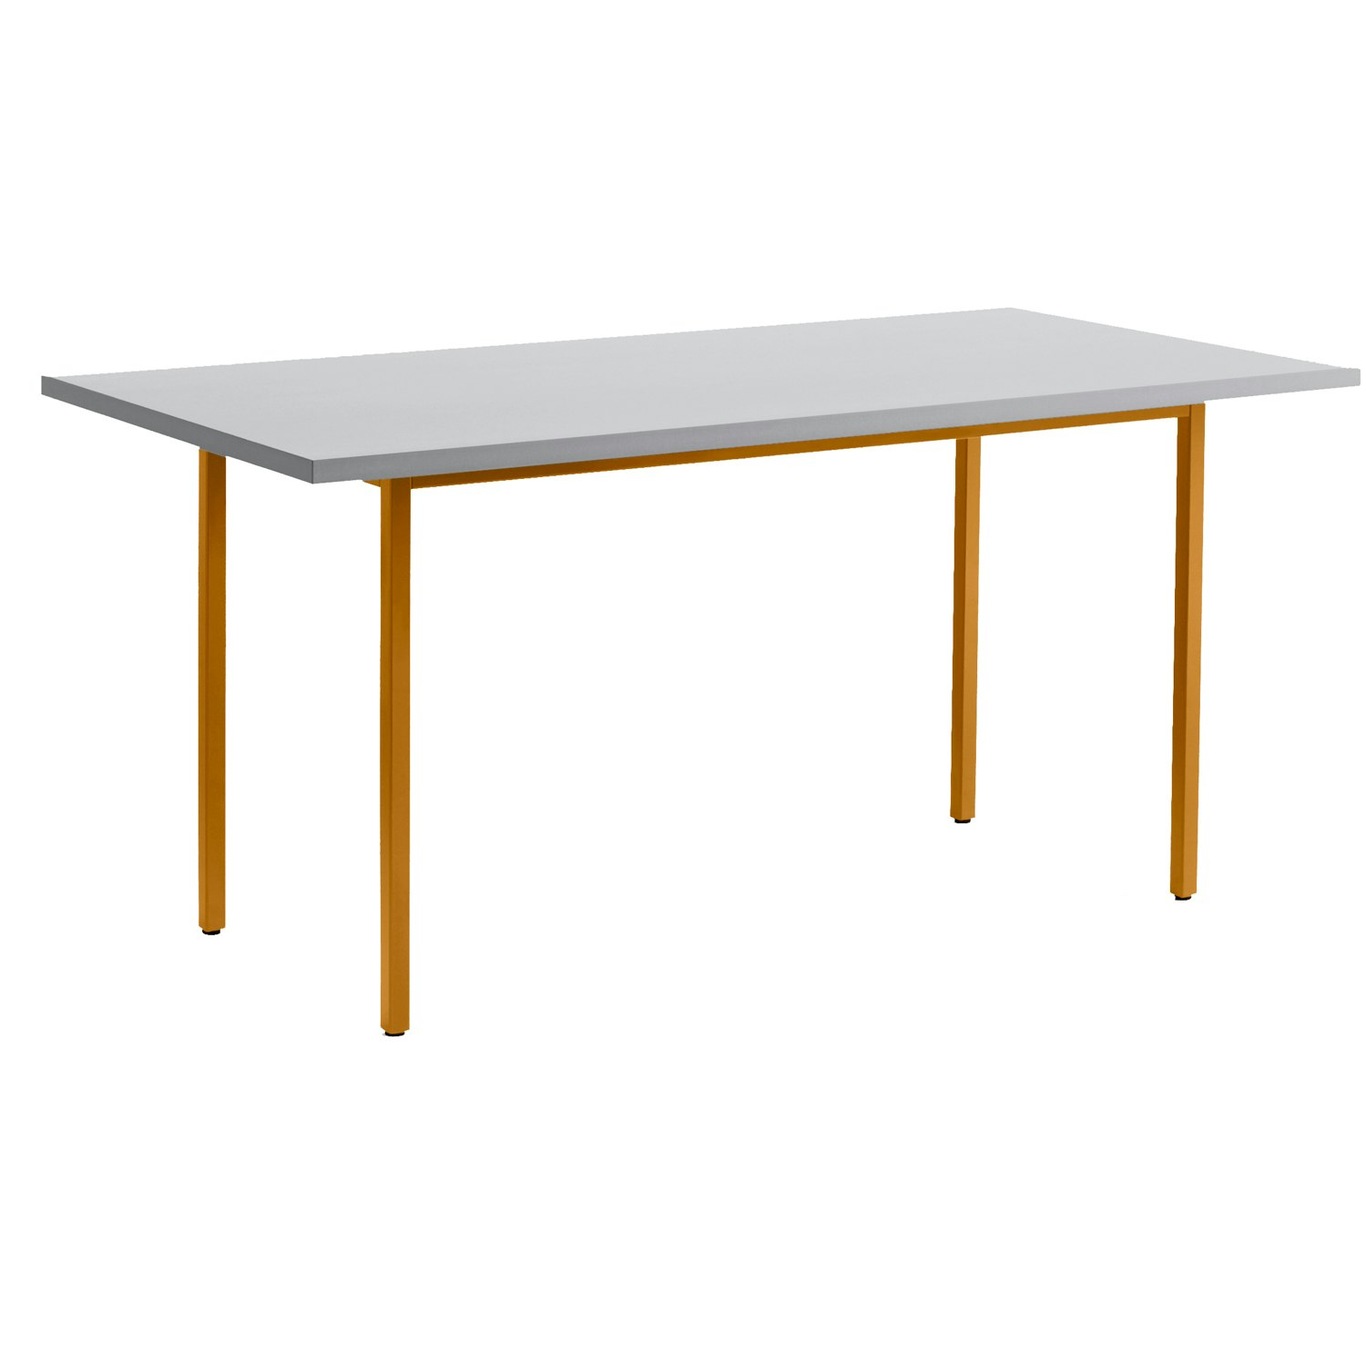 Two-Colour Table 160x82 cm, Ochre / Light Grey